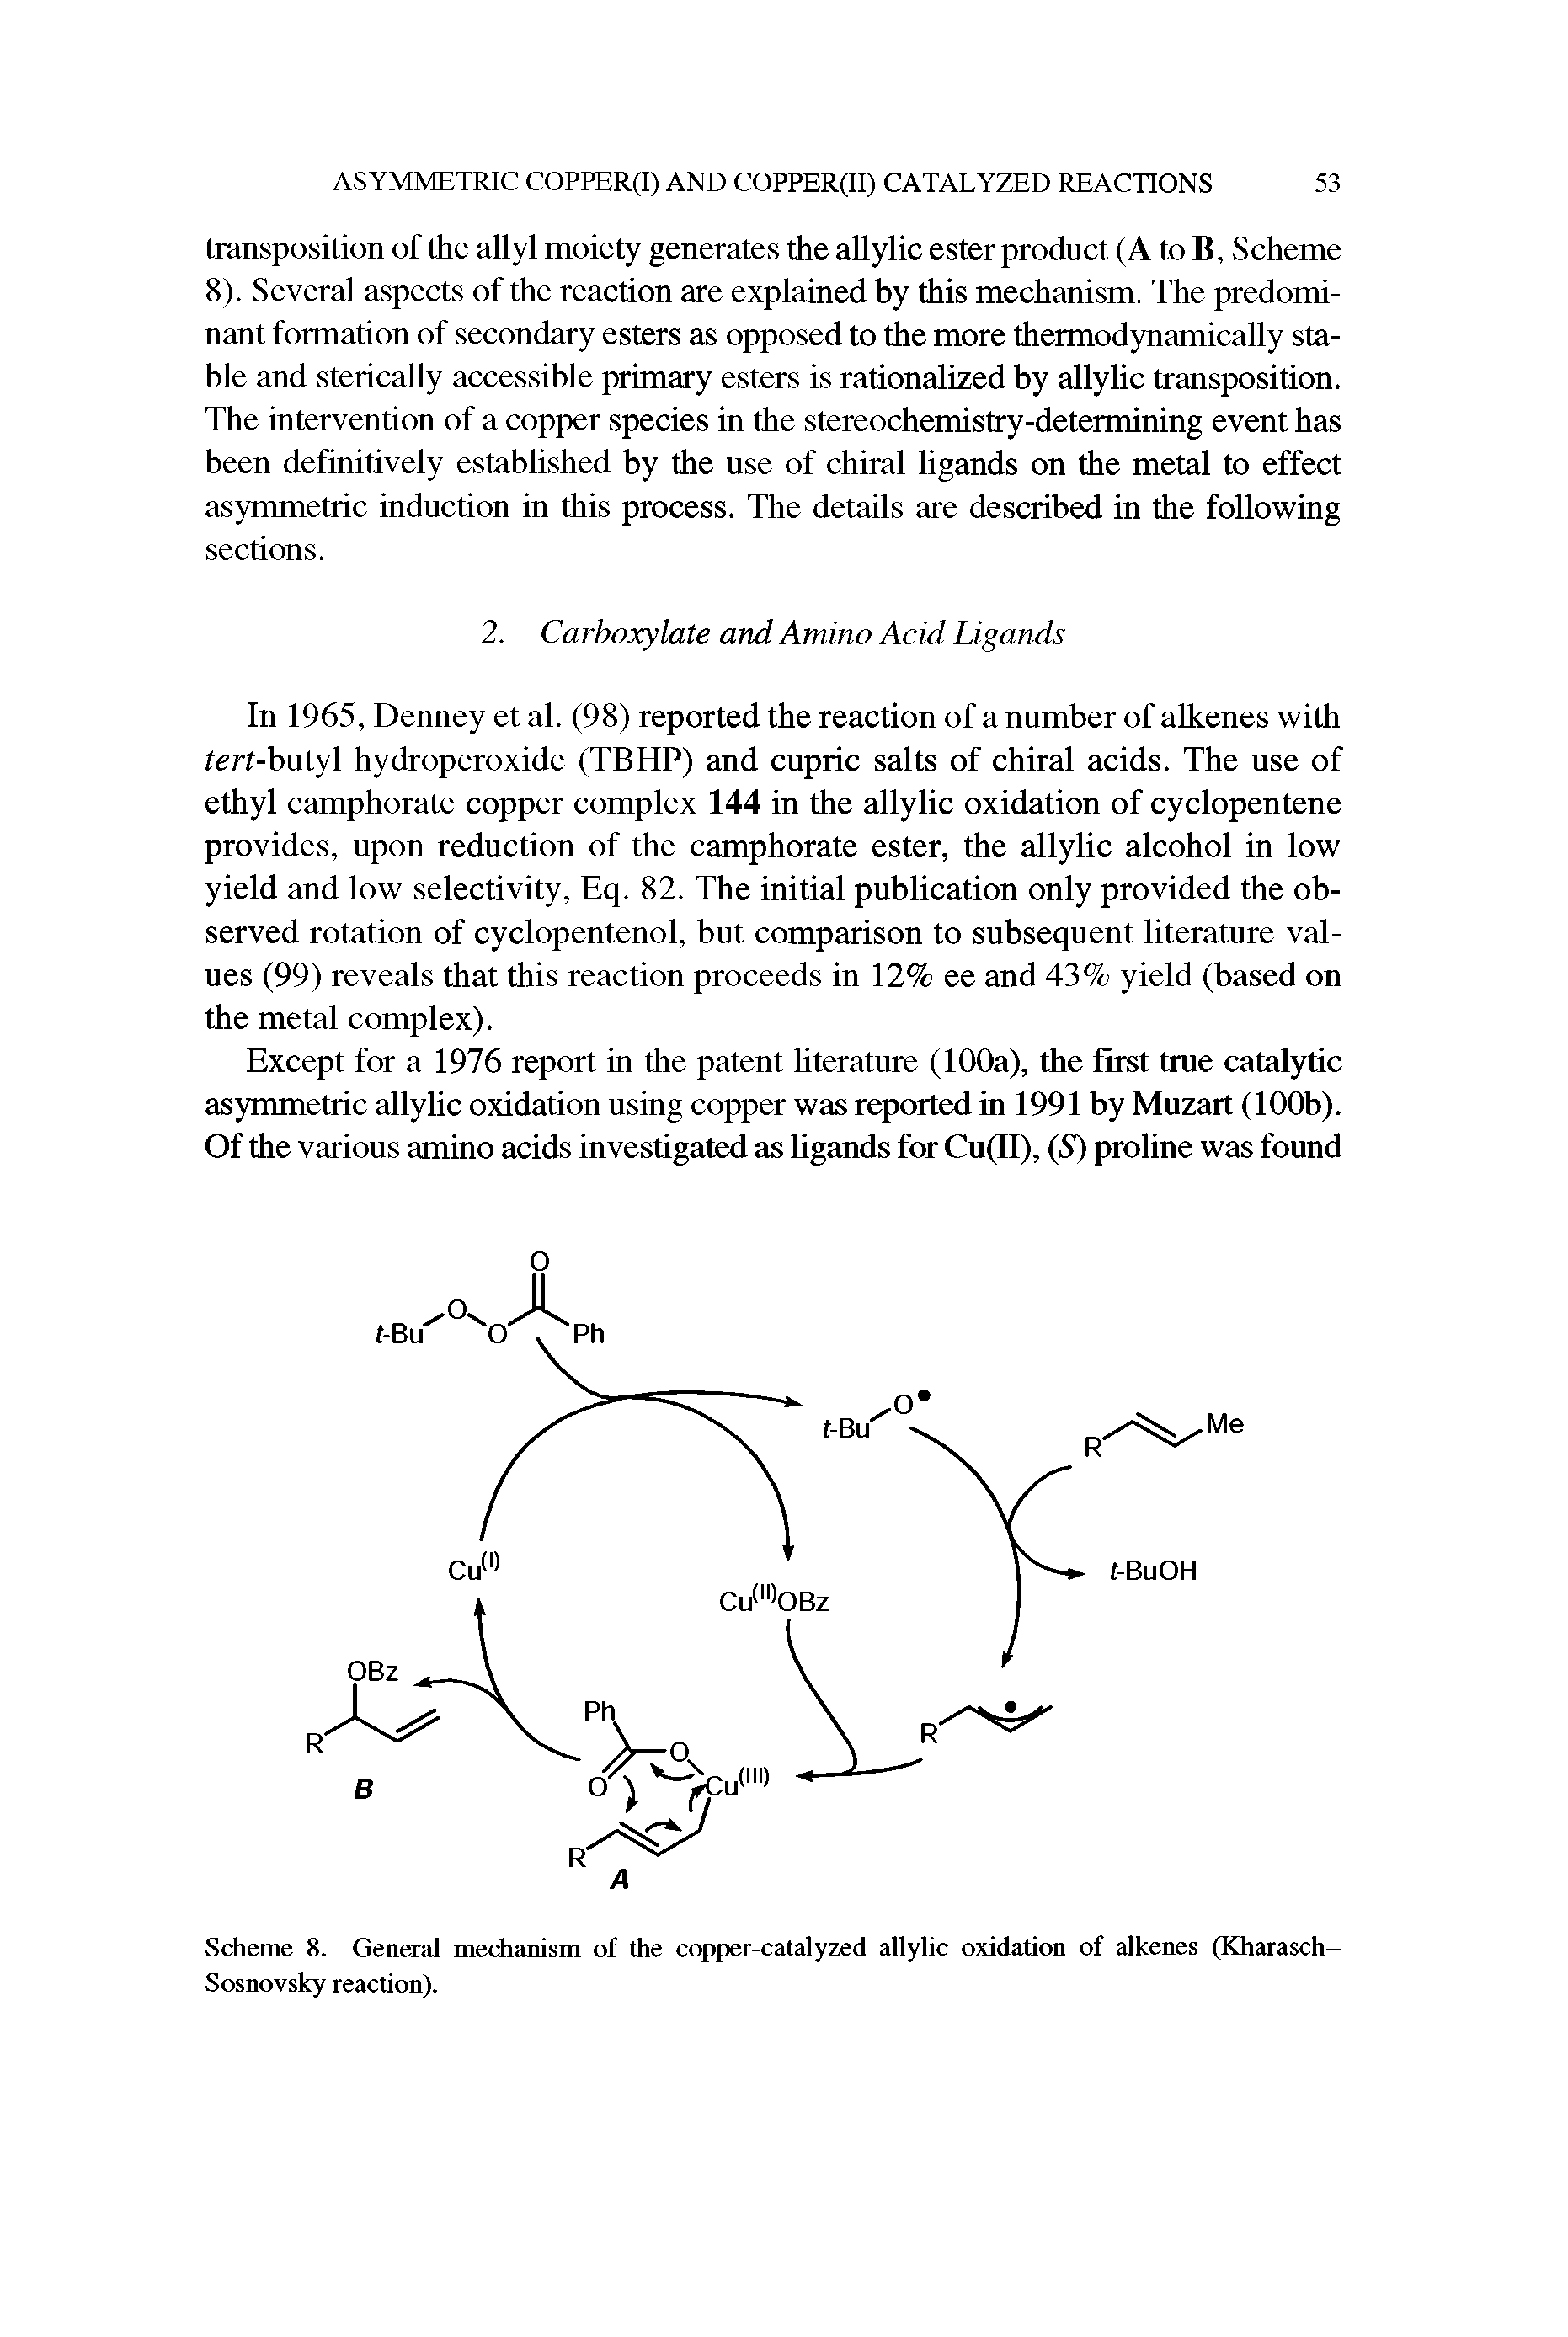 Scheme 8. General mechanism of the copper-catalyzed allylic oxidation of alkenes (Kharasch-Sosnovsky reaction).